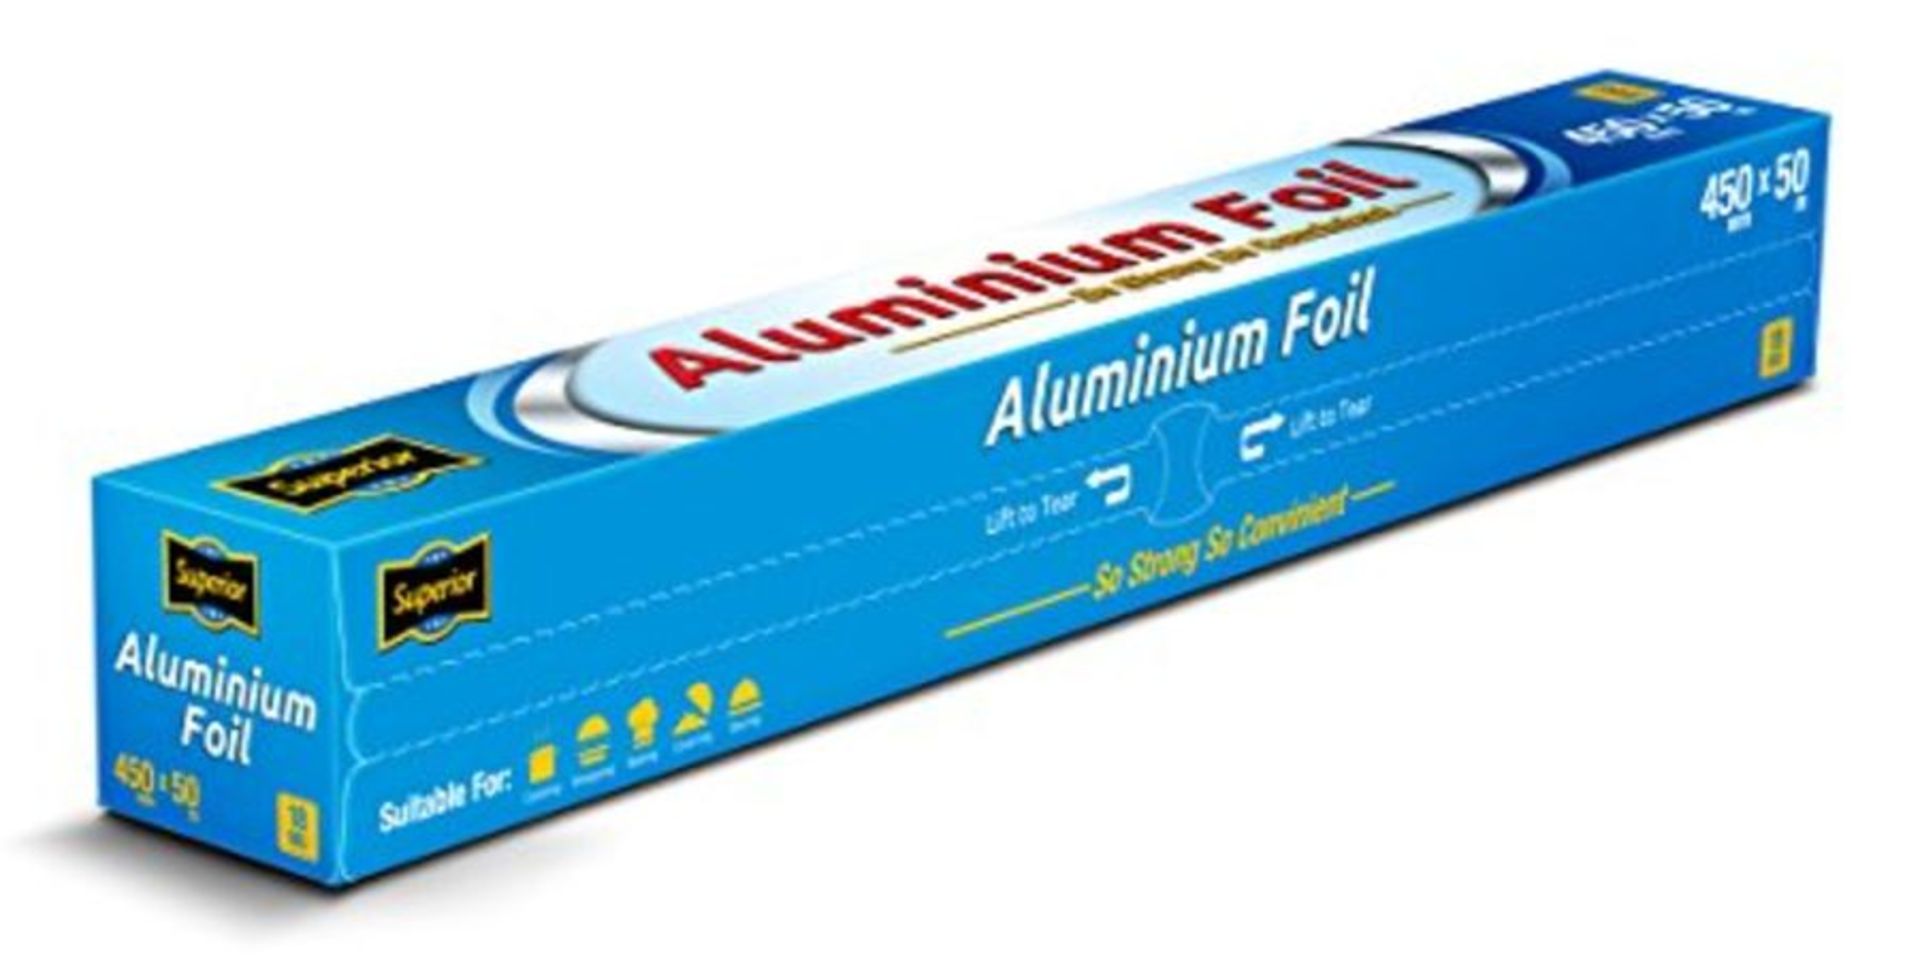 Superior Premium Heavy Duty Quality Food Service Catering Aluminium Foil Roll 45cm x 5